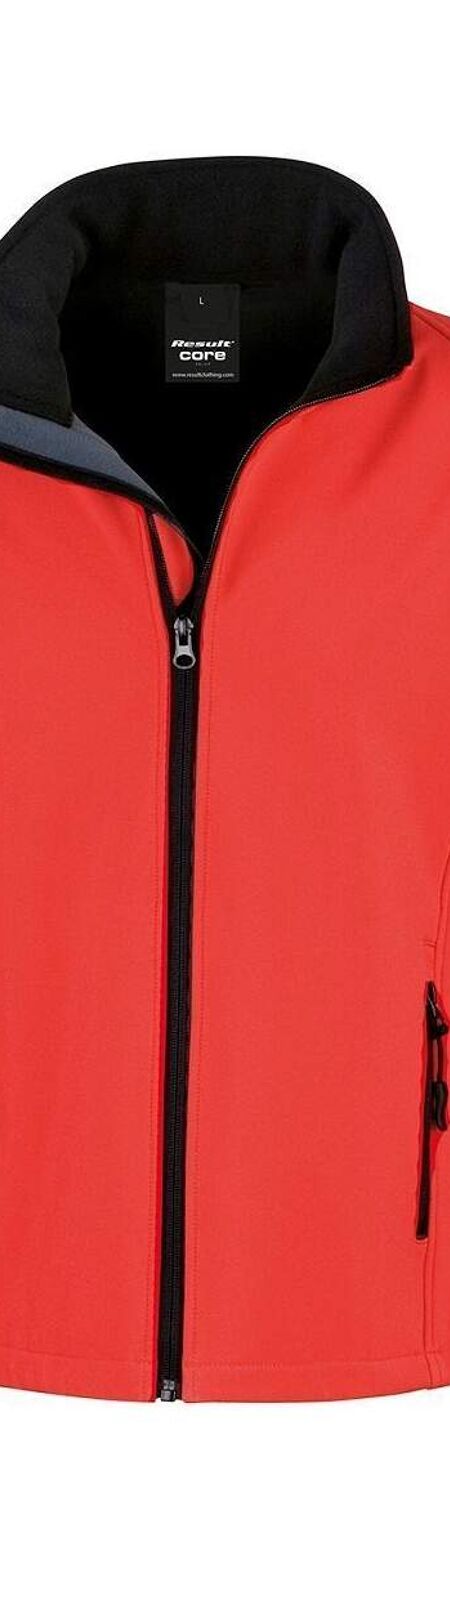 Veste softshell - Femme - R231F - rouge et noir